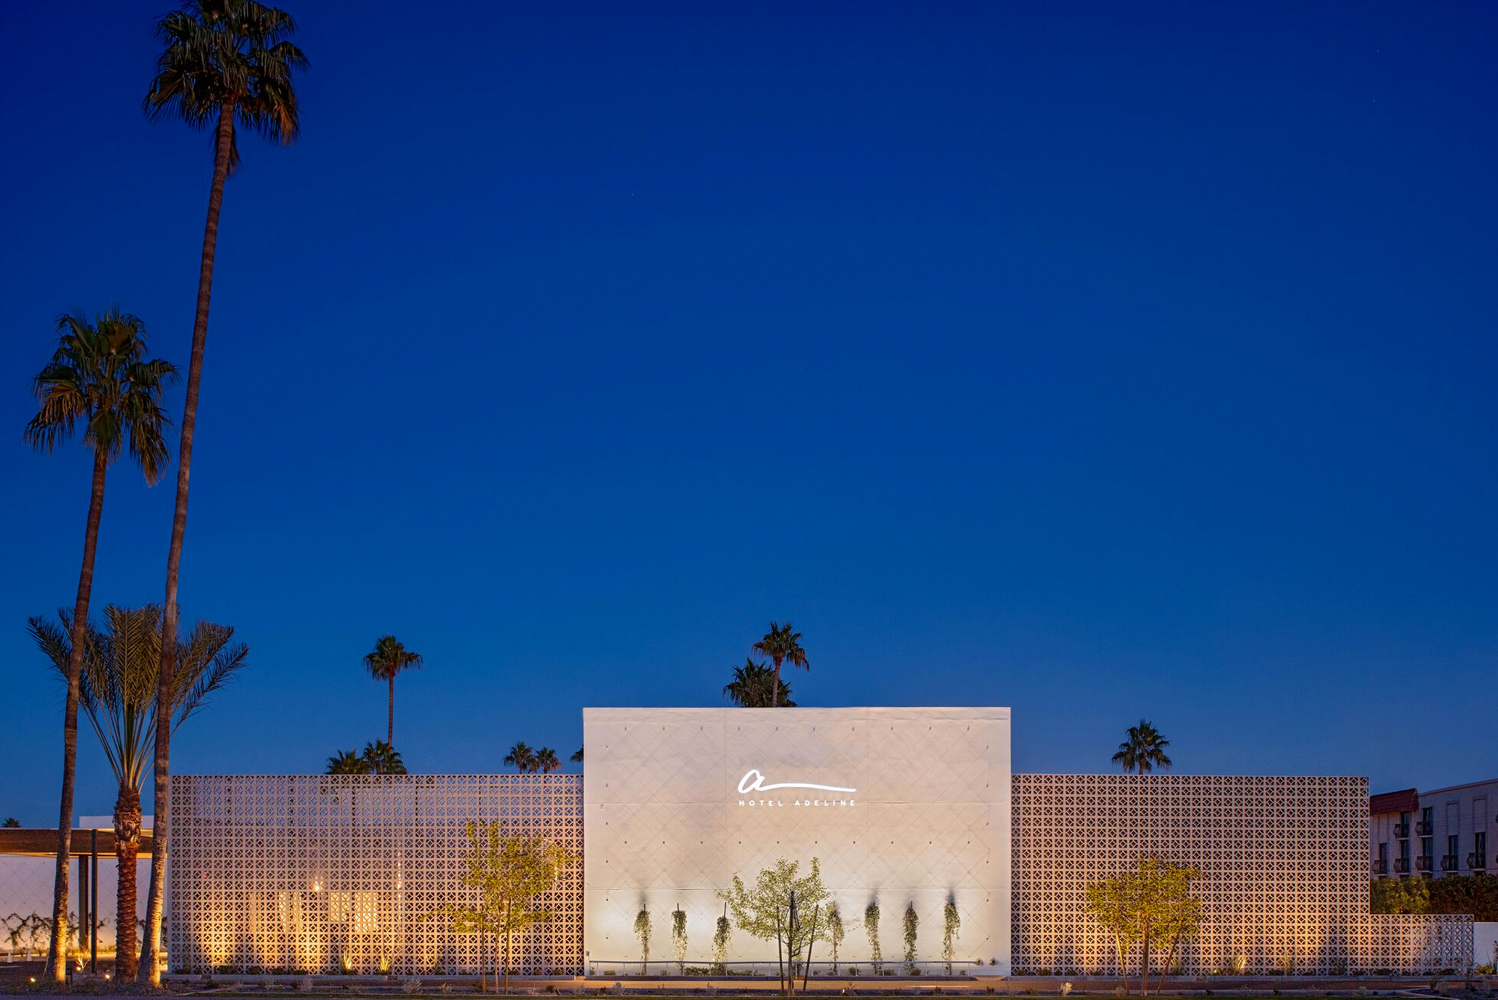 Hotel Adeline opened in Scottsdale Arizona following a 13 million renovation